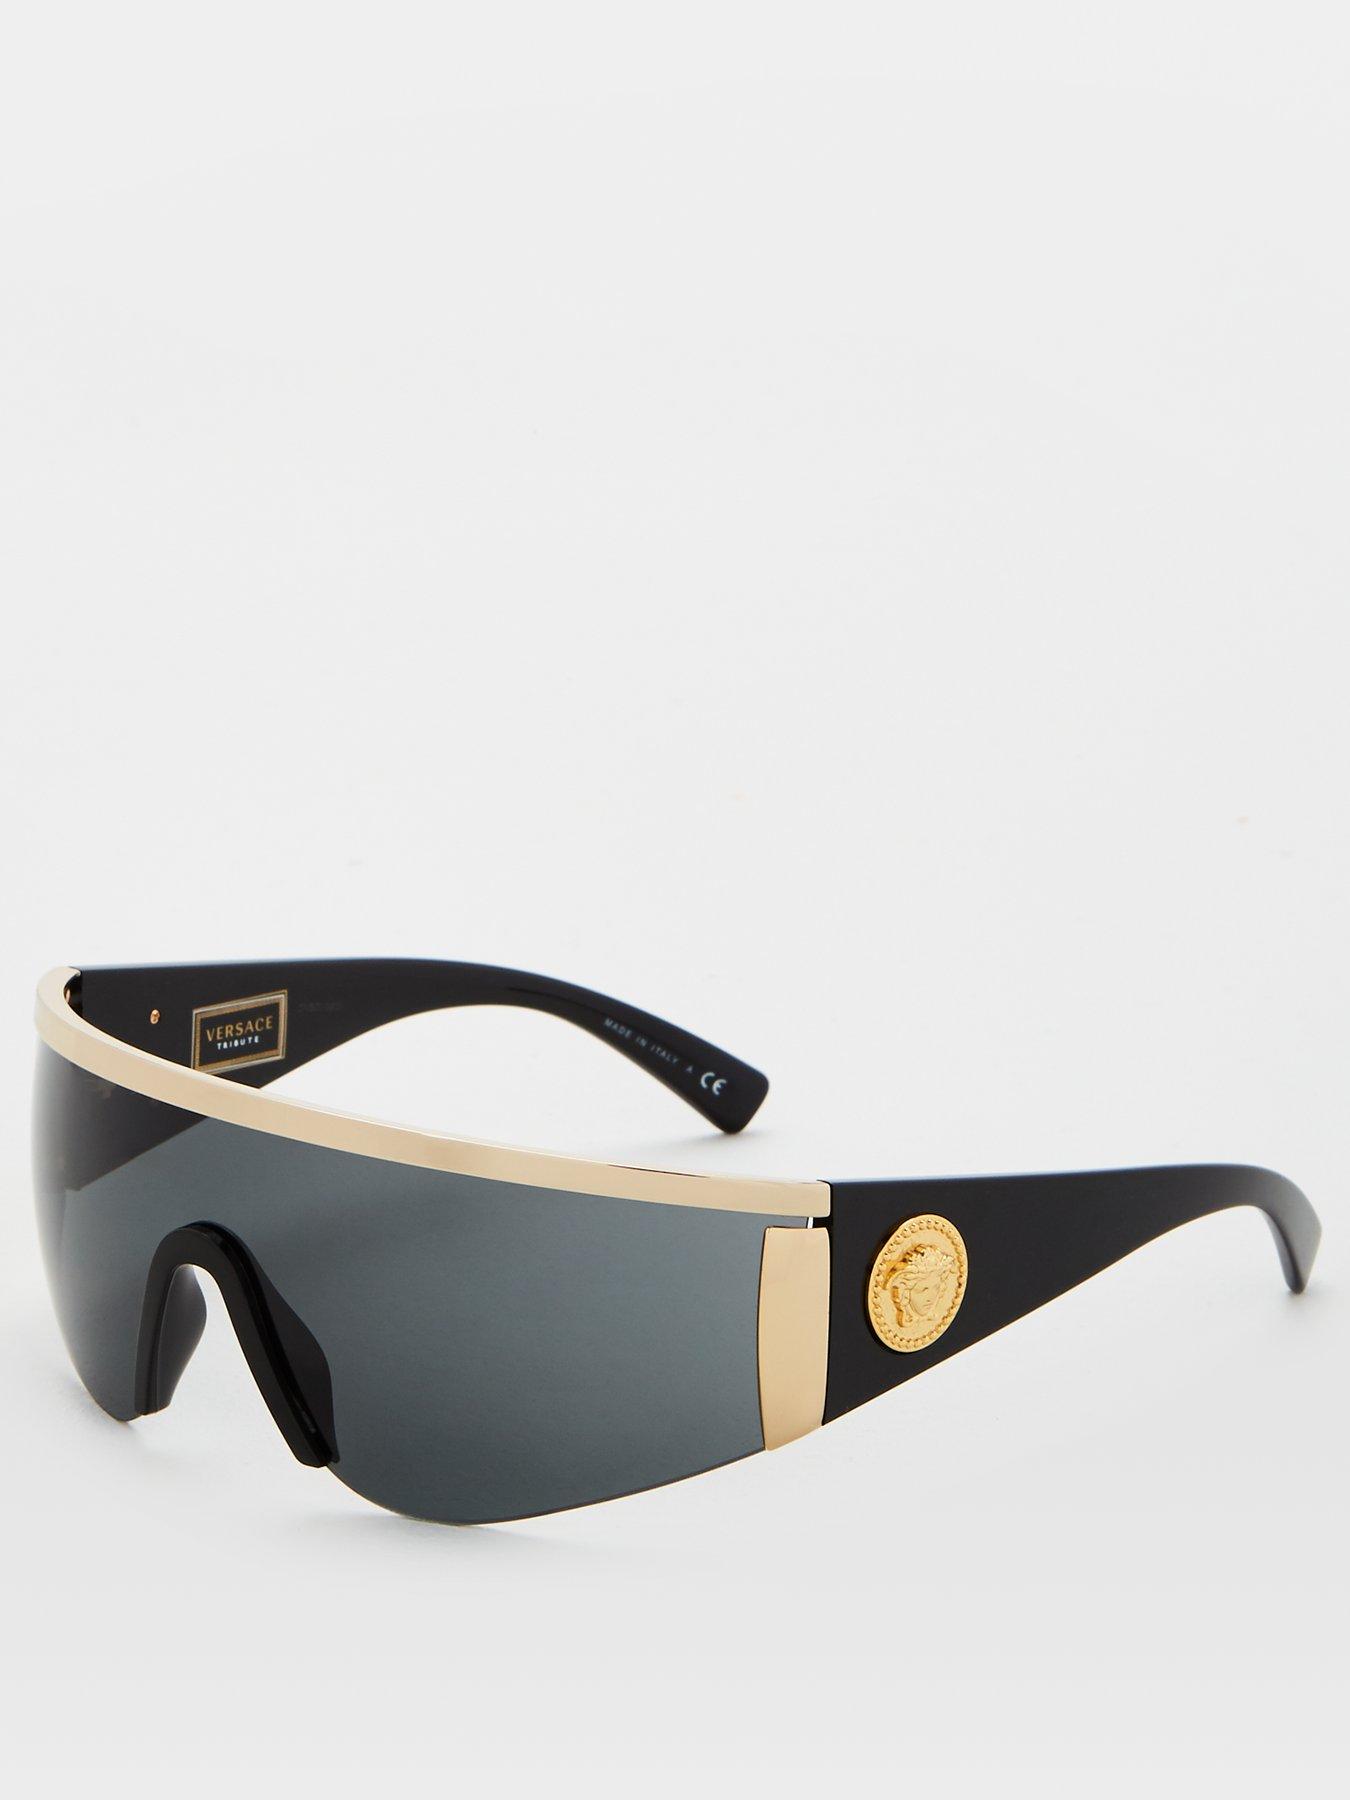 versace sunglasses cheap